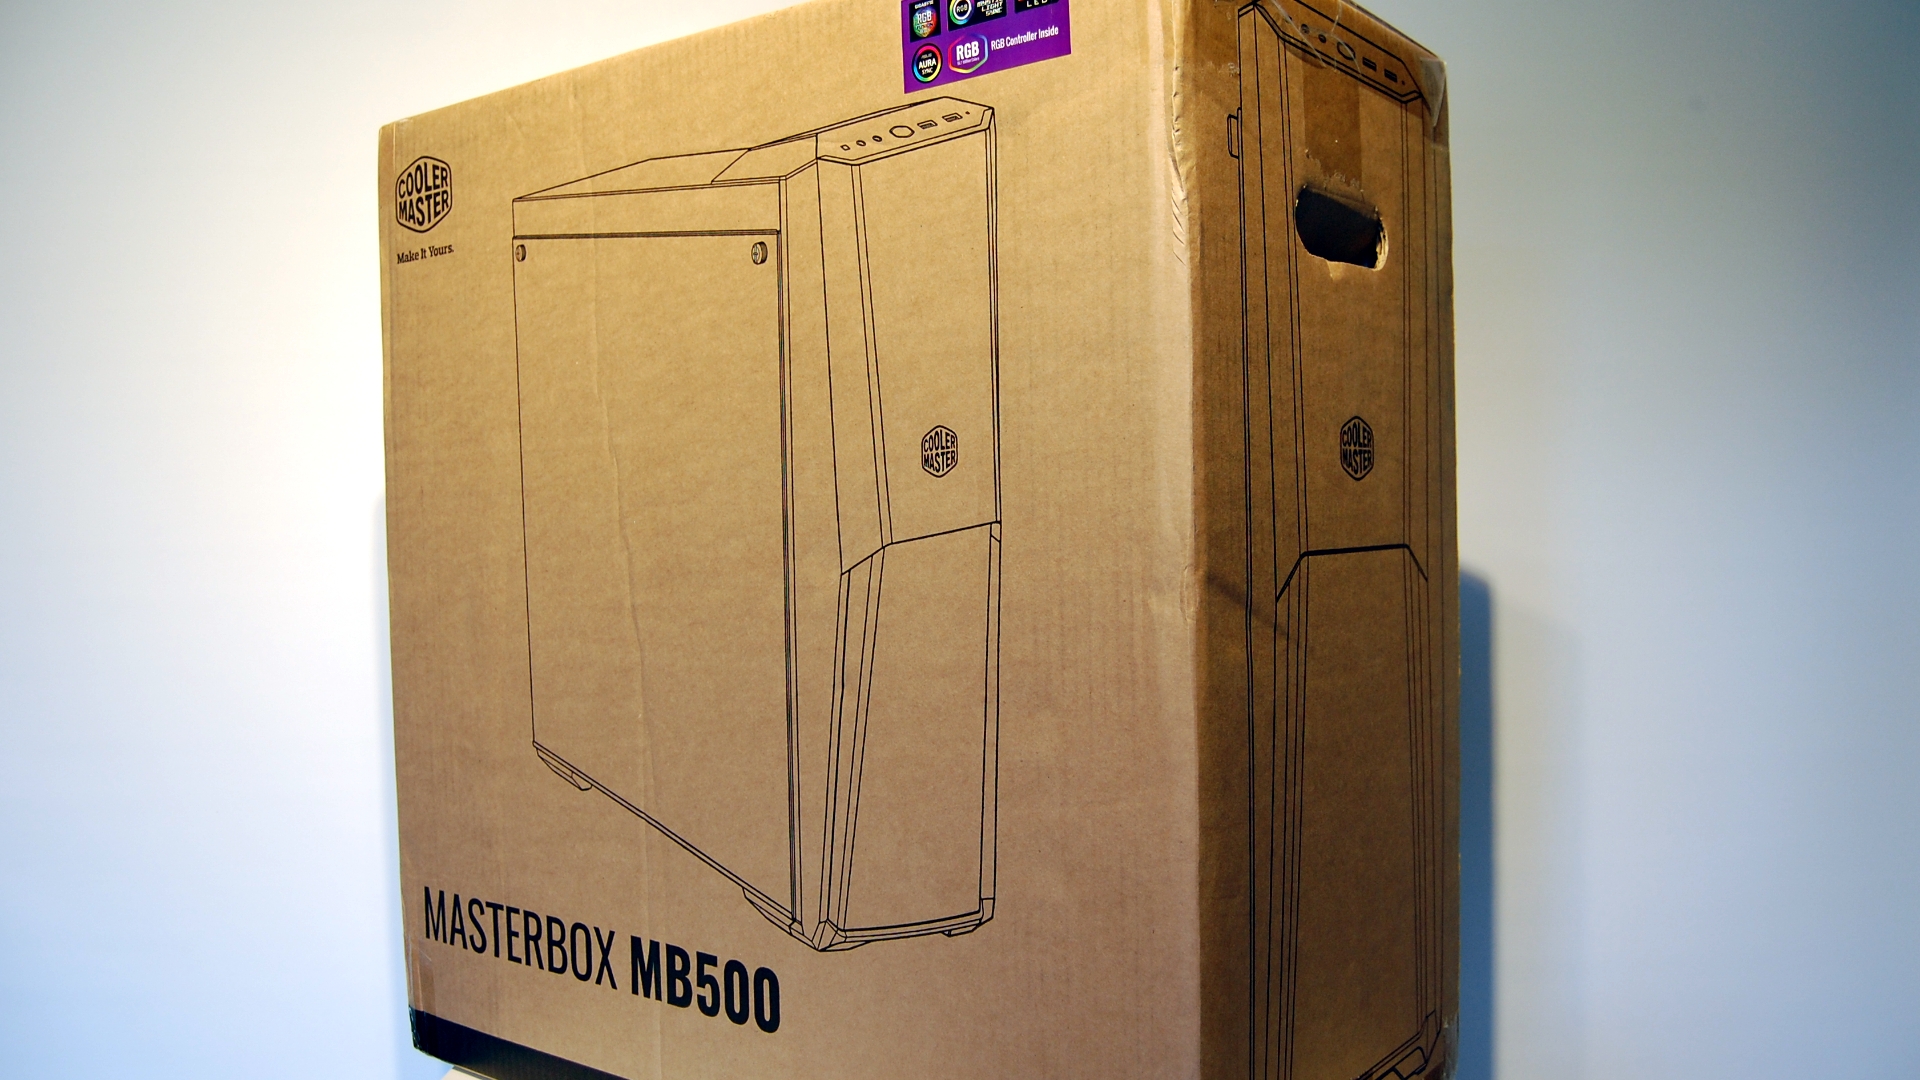 Cooler Master Masterbox MB500